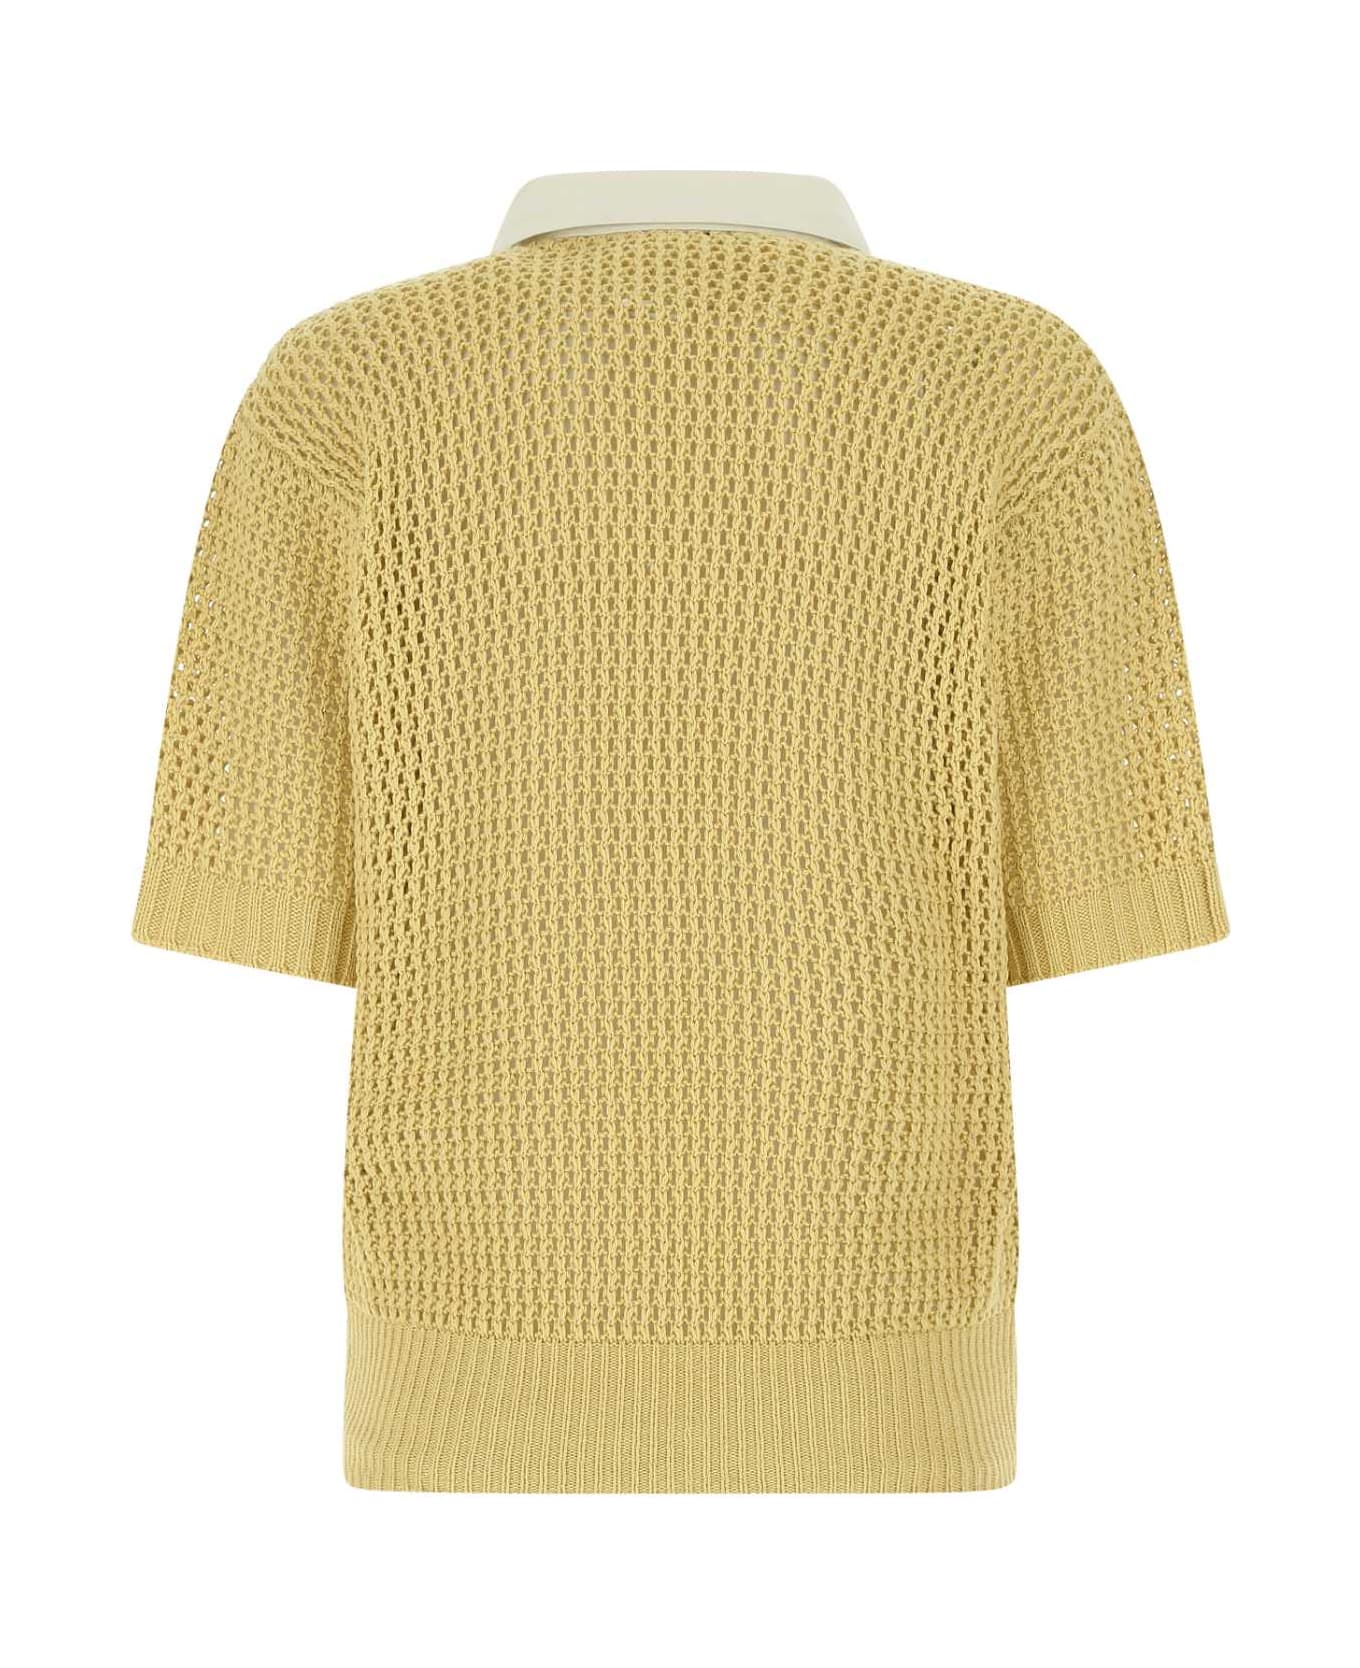 Agnona Mustard Cotton And Cashmere Polo Shirt - G11